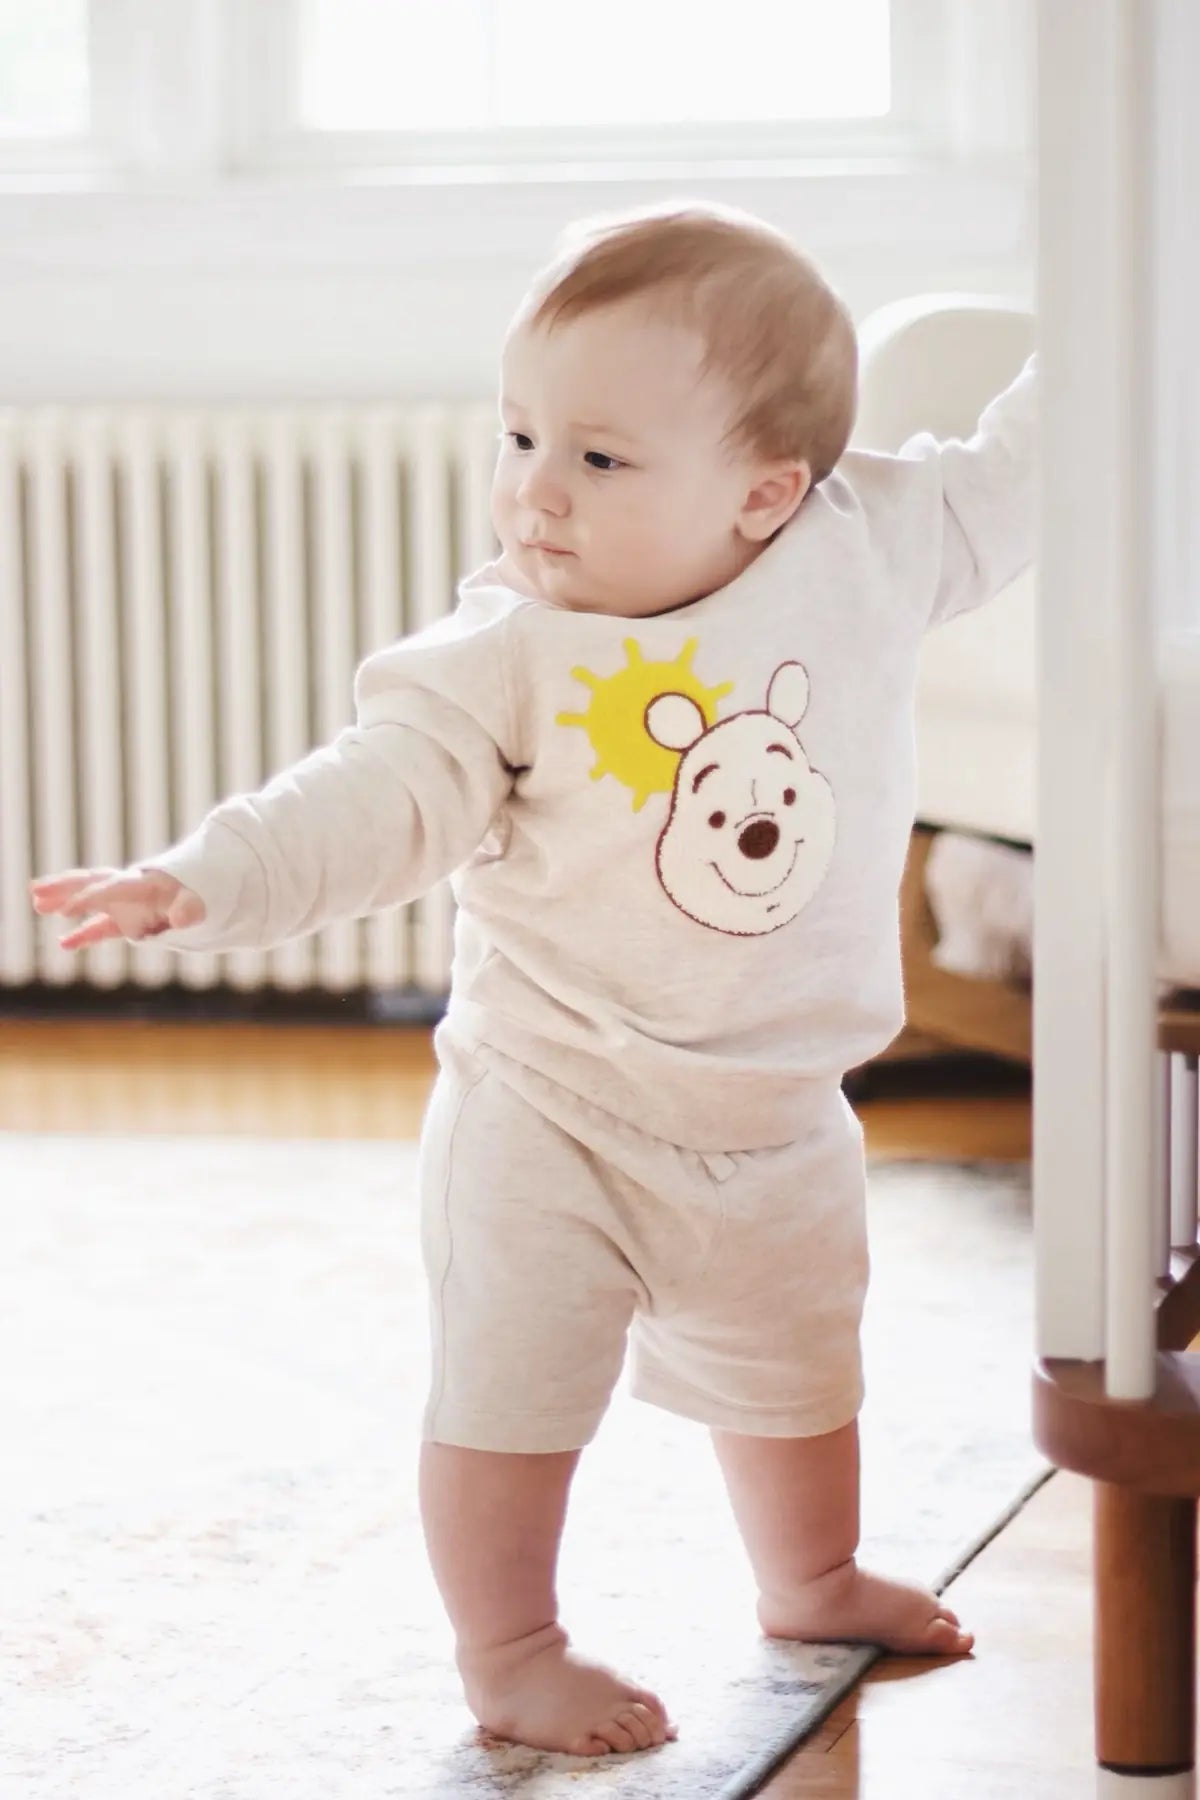 Baby taking steps in Winnie The Pooh romper